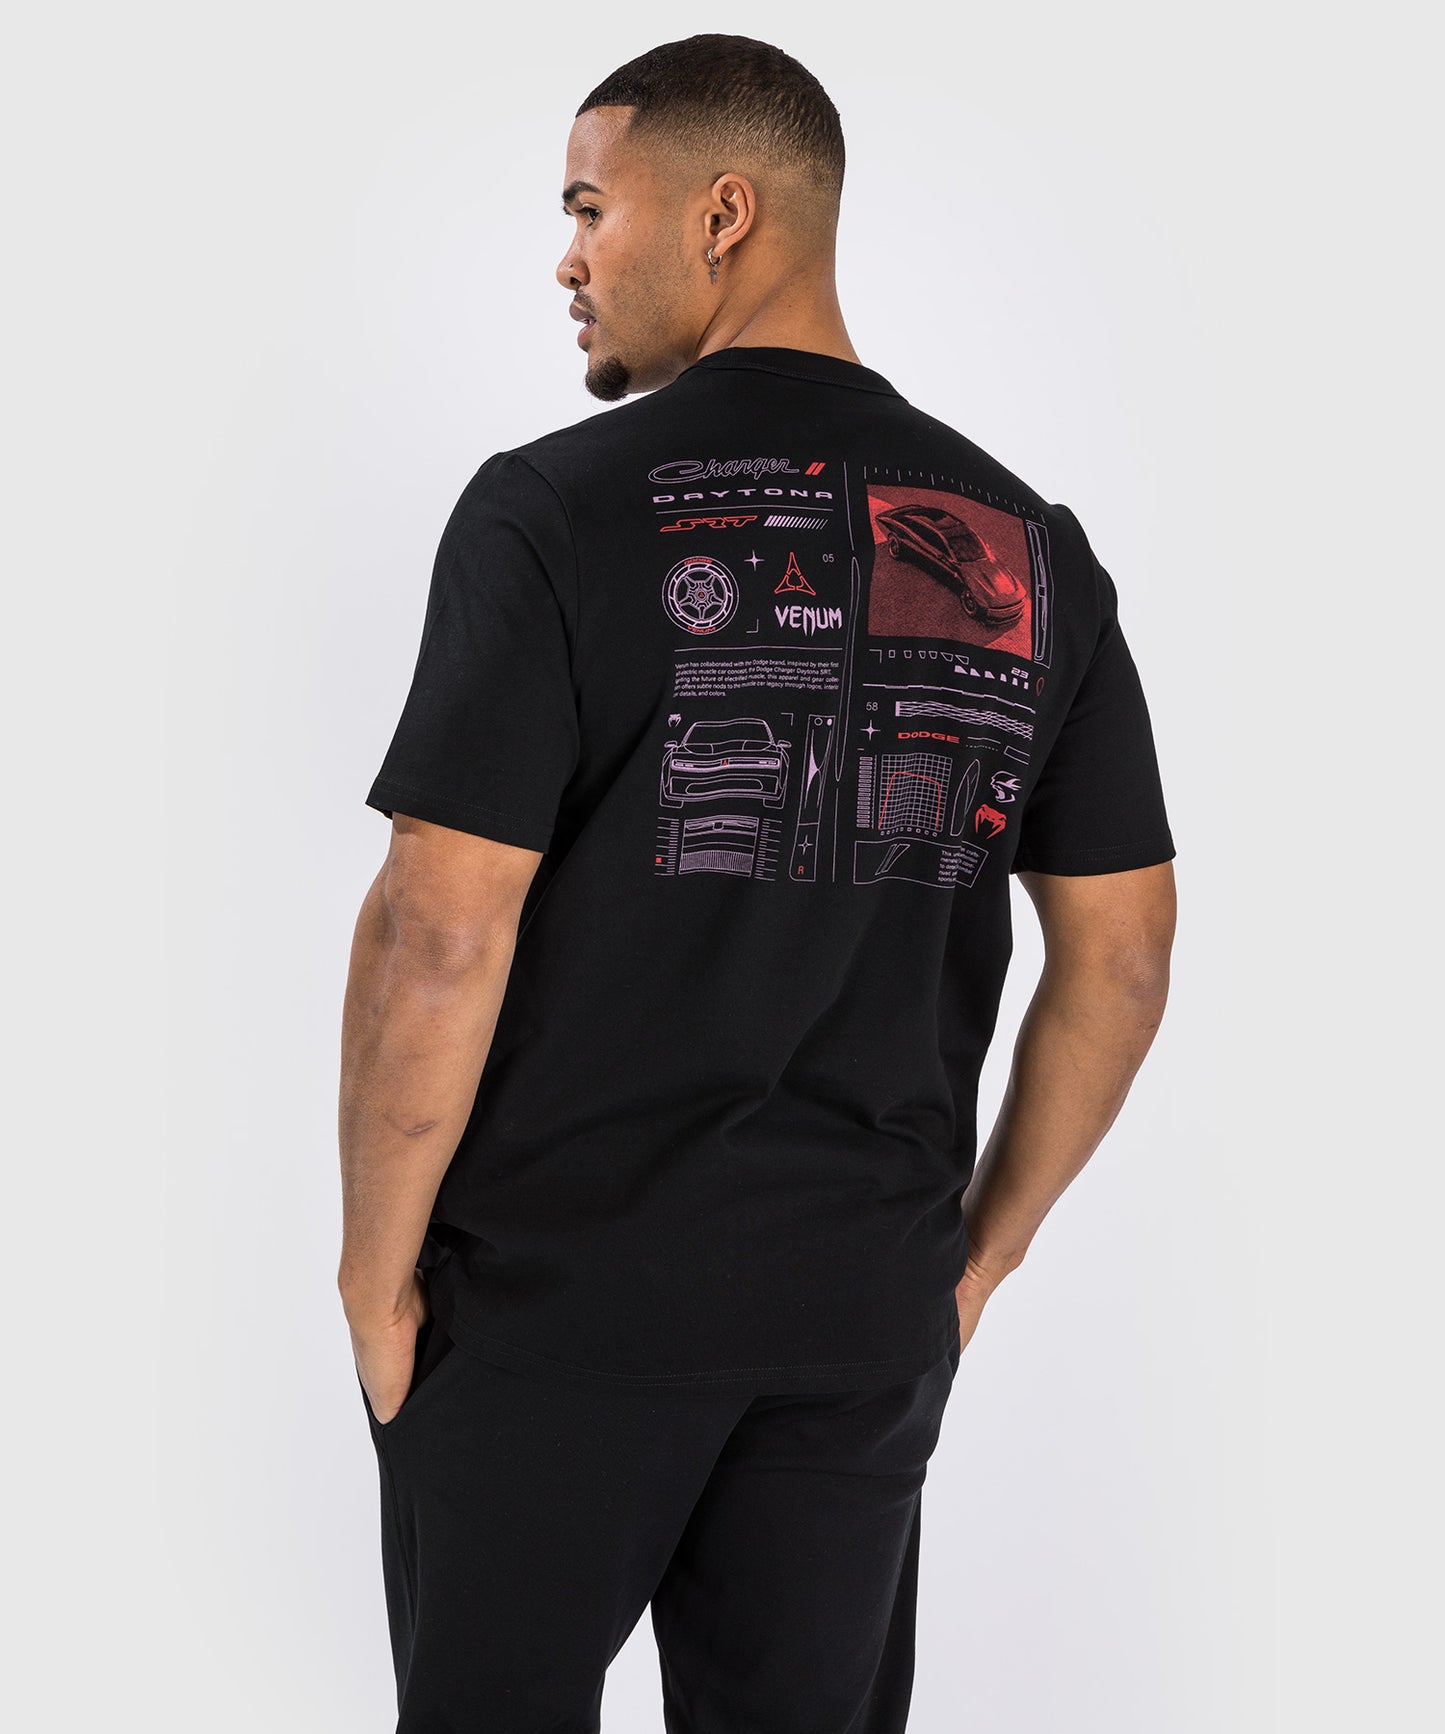 Venum x Dodge Banshee Men’s T-Shirt - Black